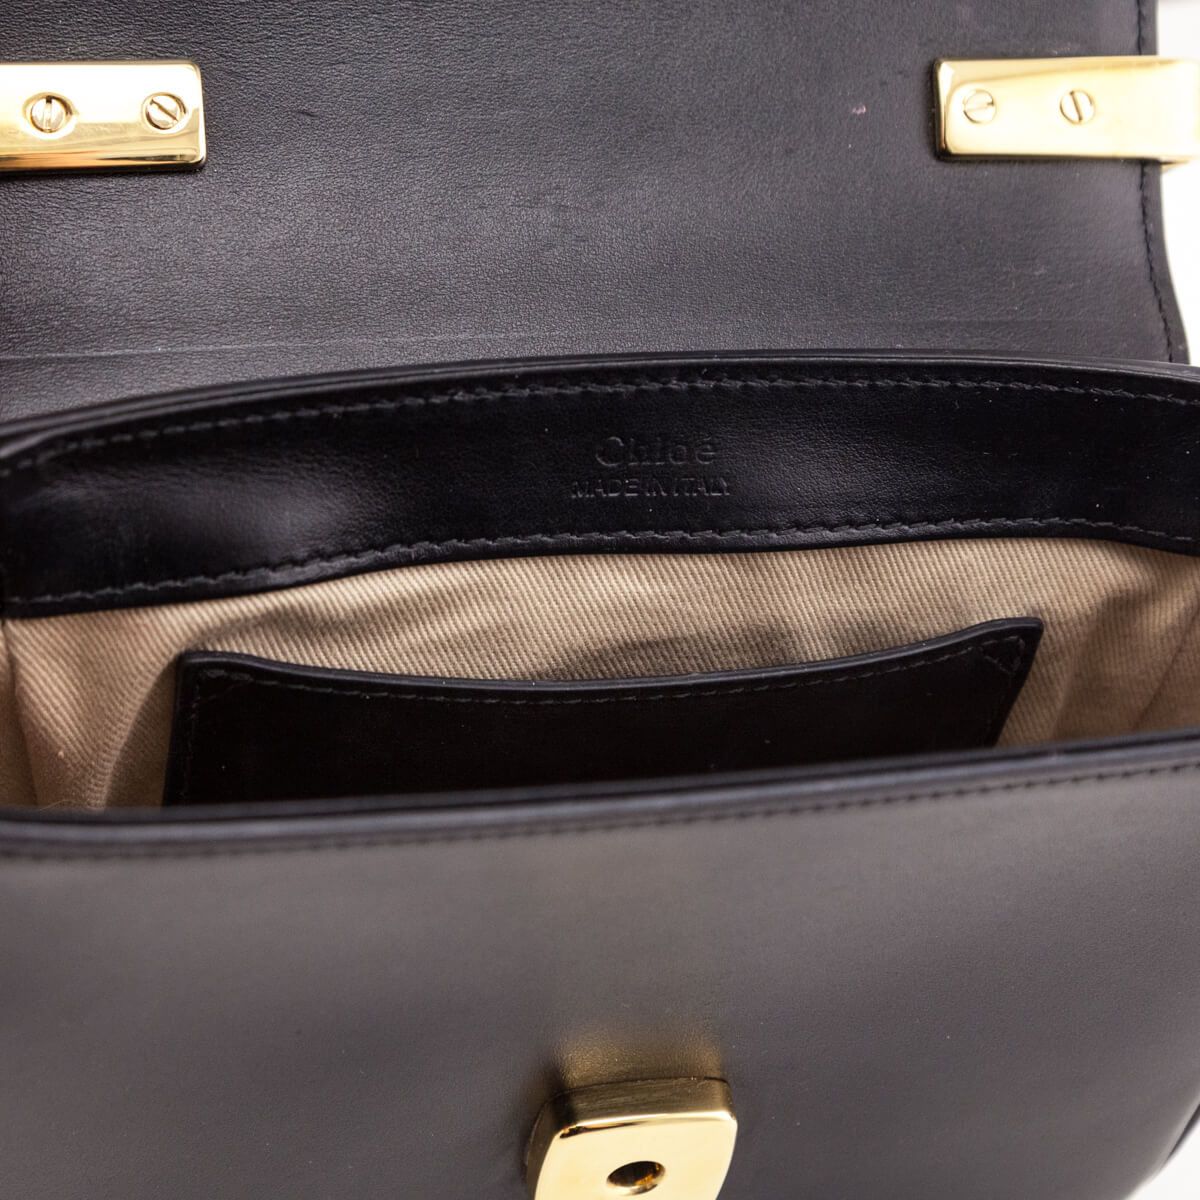 Chloe Black Calfskin Suede Mini C Crossbody Bag - Love that Bag etc - Preowned Authentic Designer Handbags & Preloved Fashions